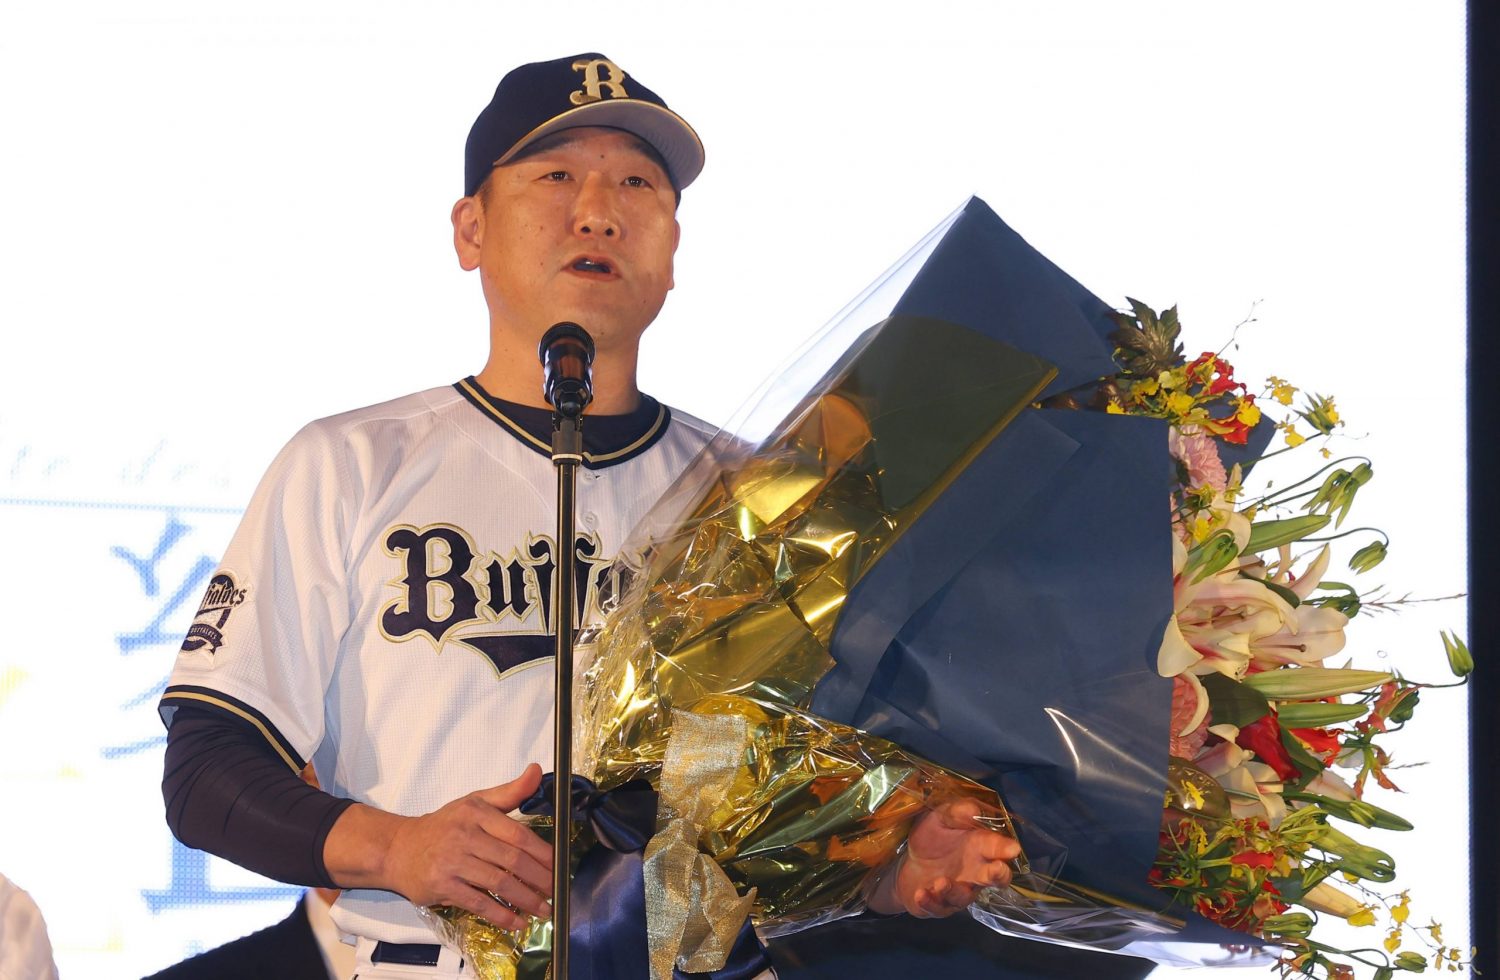 Fighters' Gosuke Katoh gets unique journey in Japanese baseball